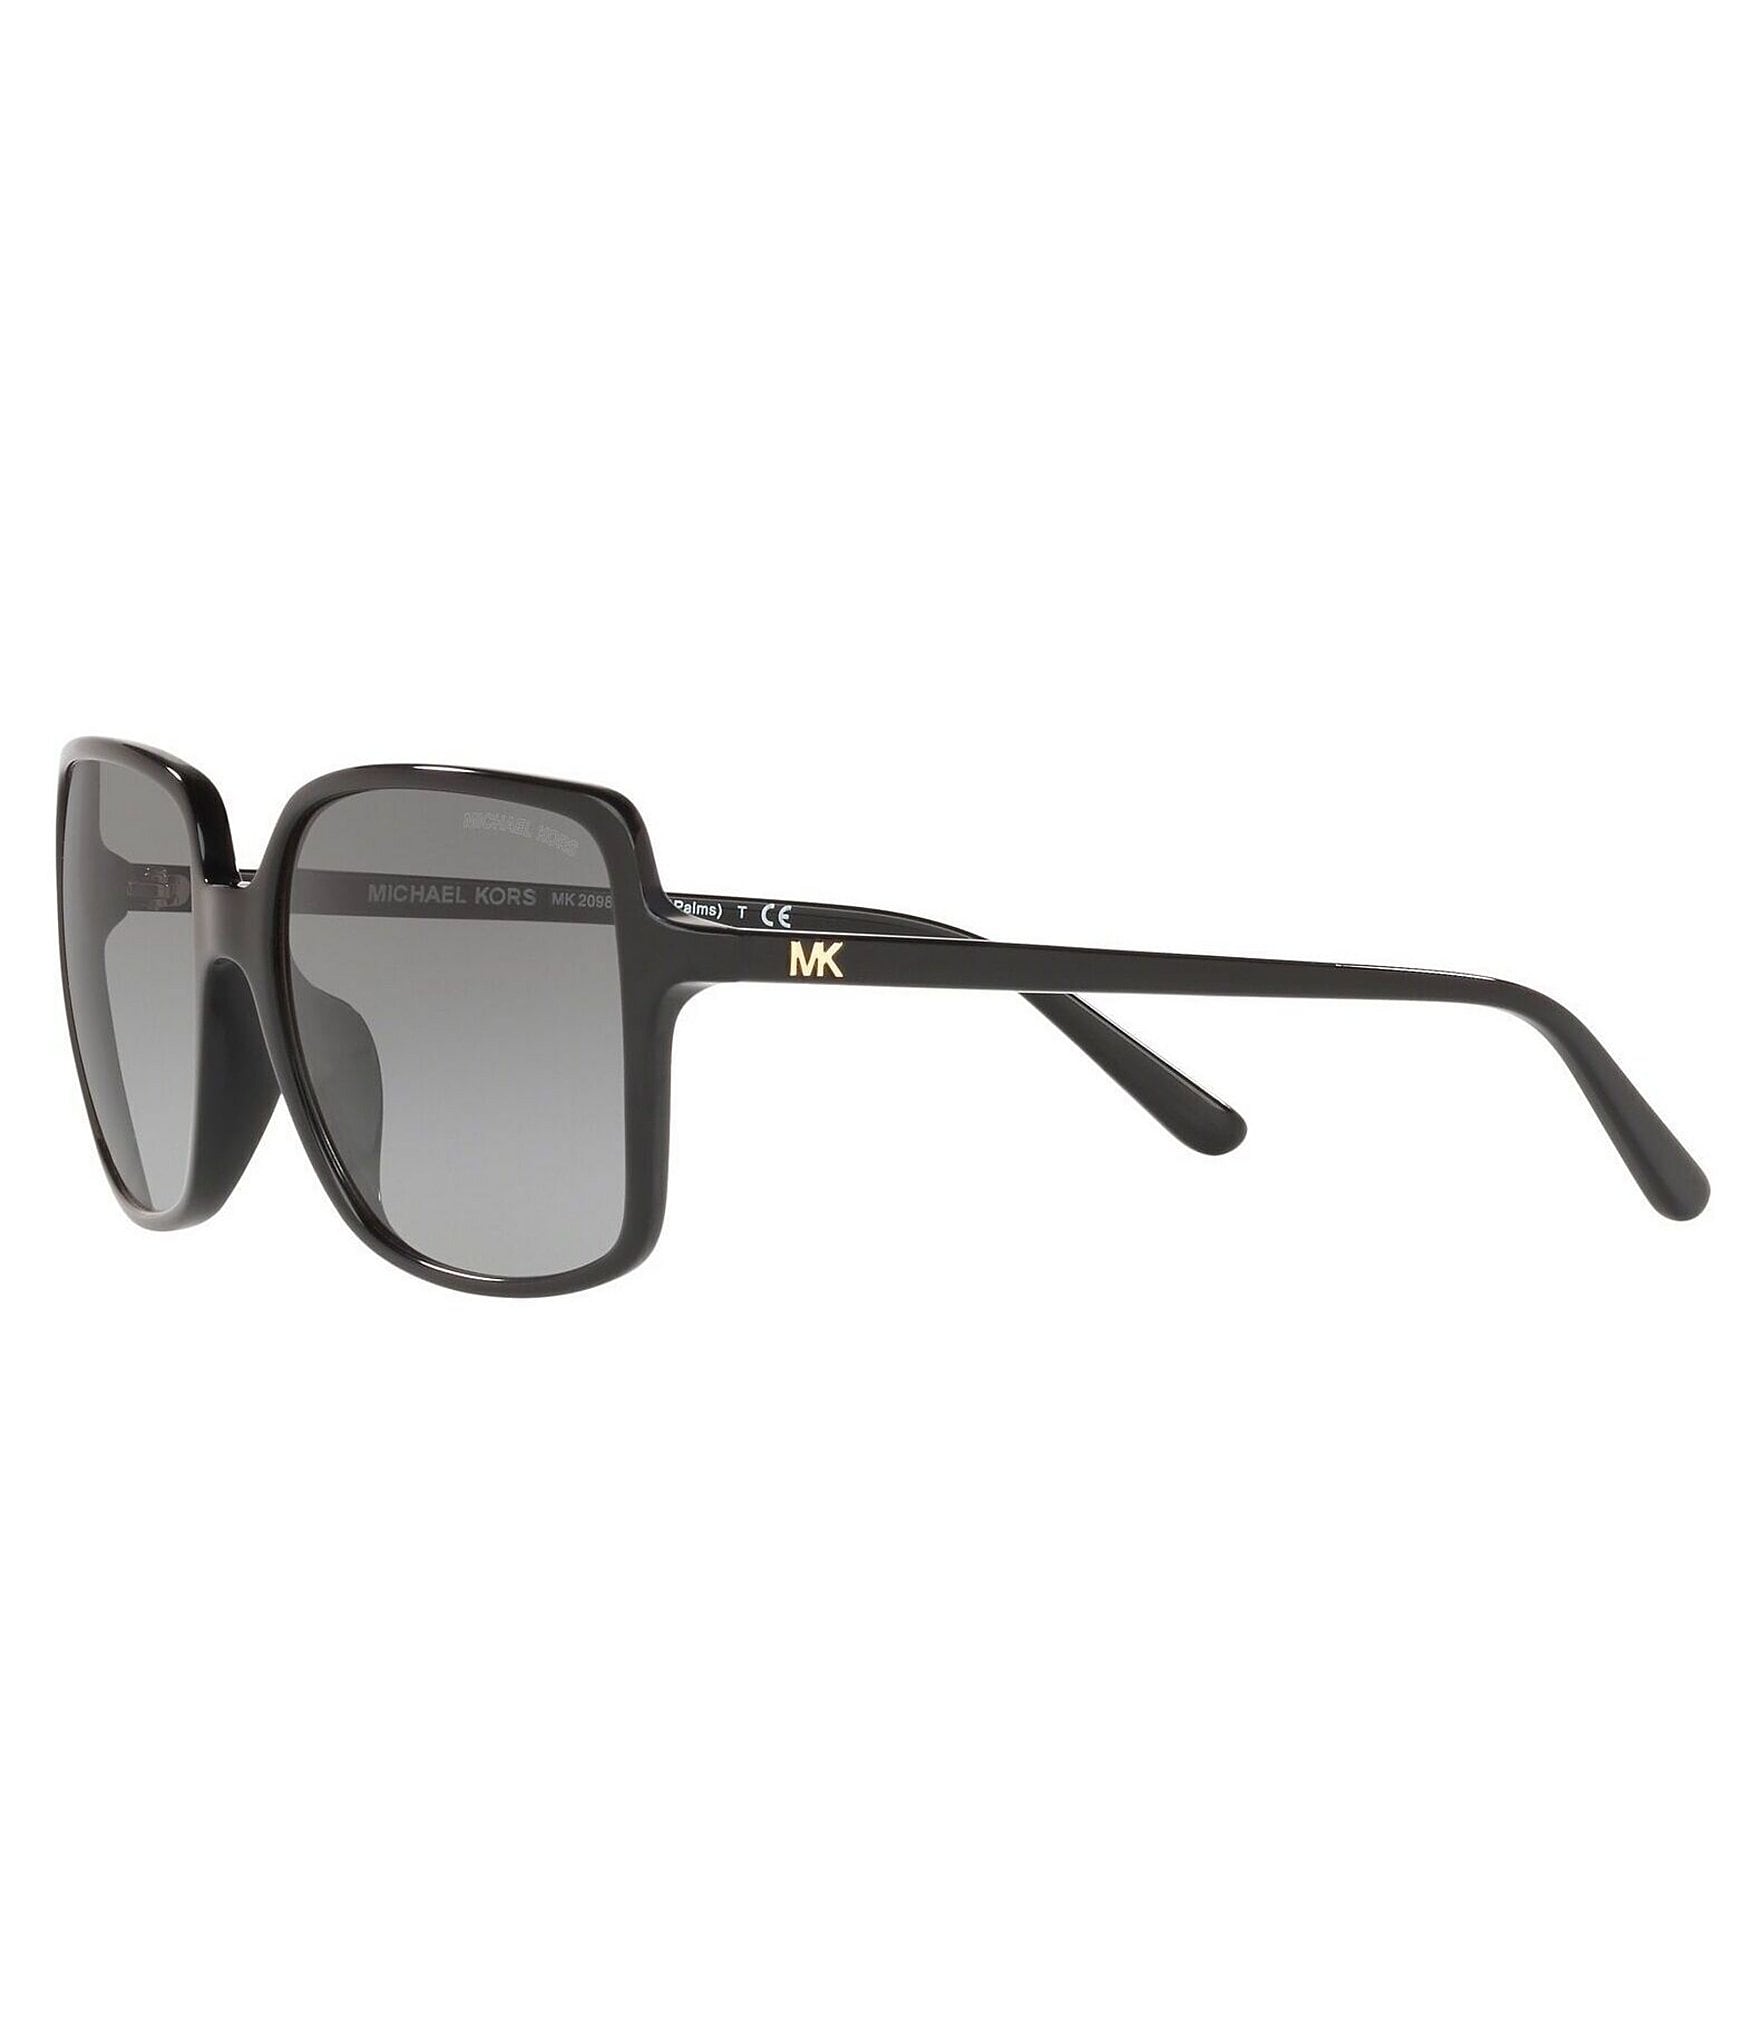 Michael Kors MK2160 Rio 54 Dark Grey Solid  Optic White Sunglasses   Sunglass Hut United Kingdom